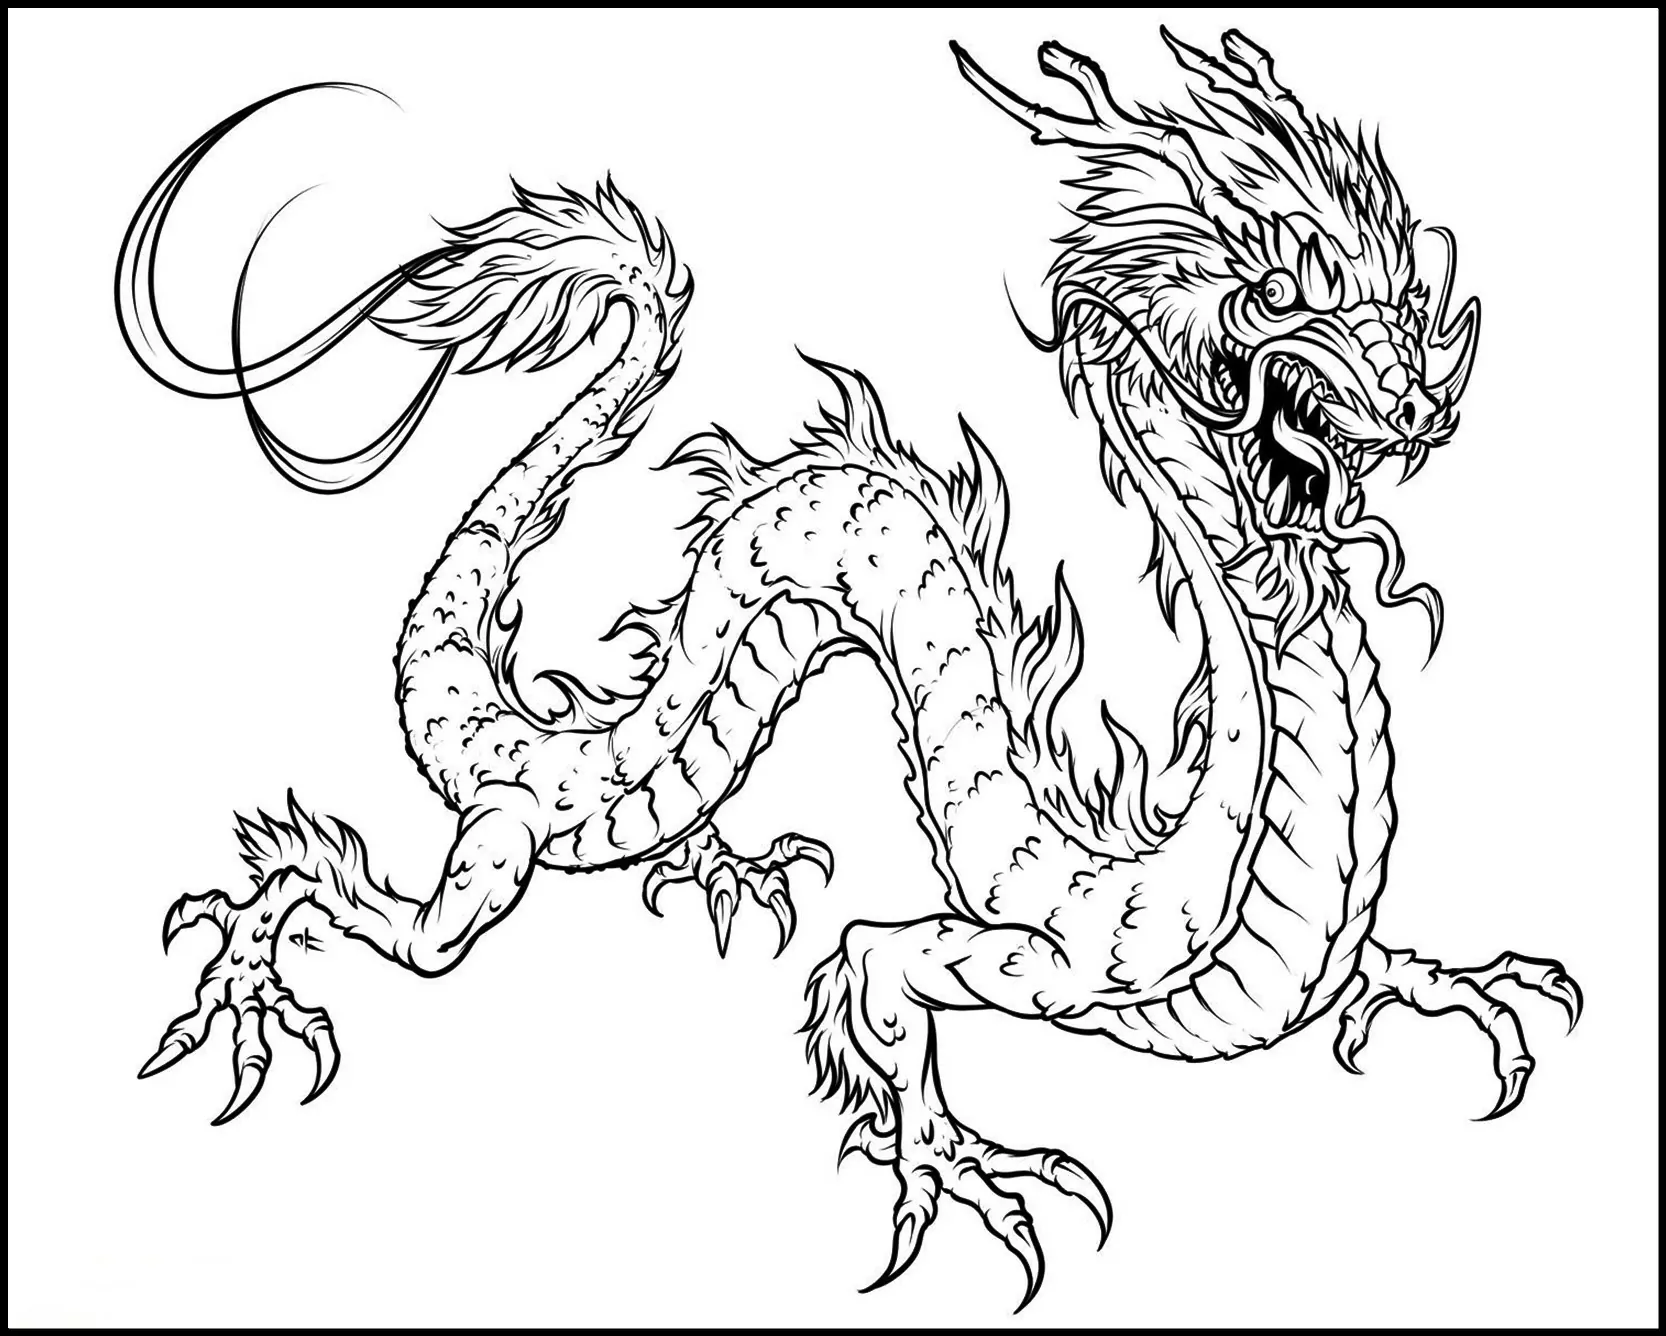 China's Dragon